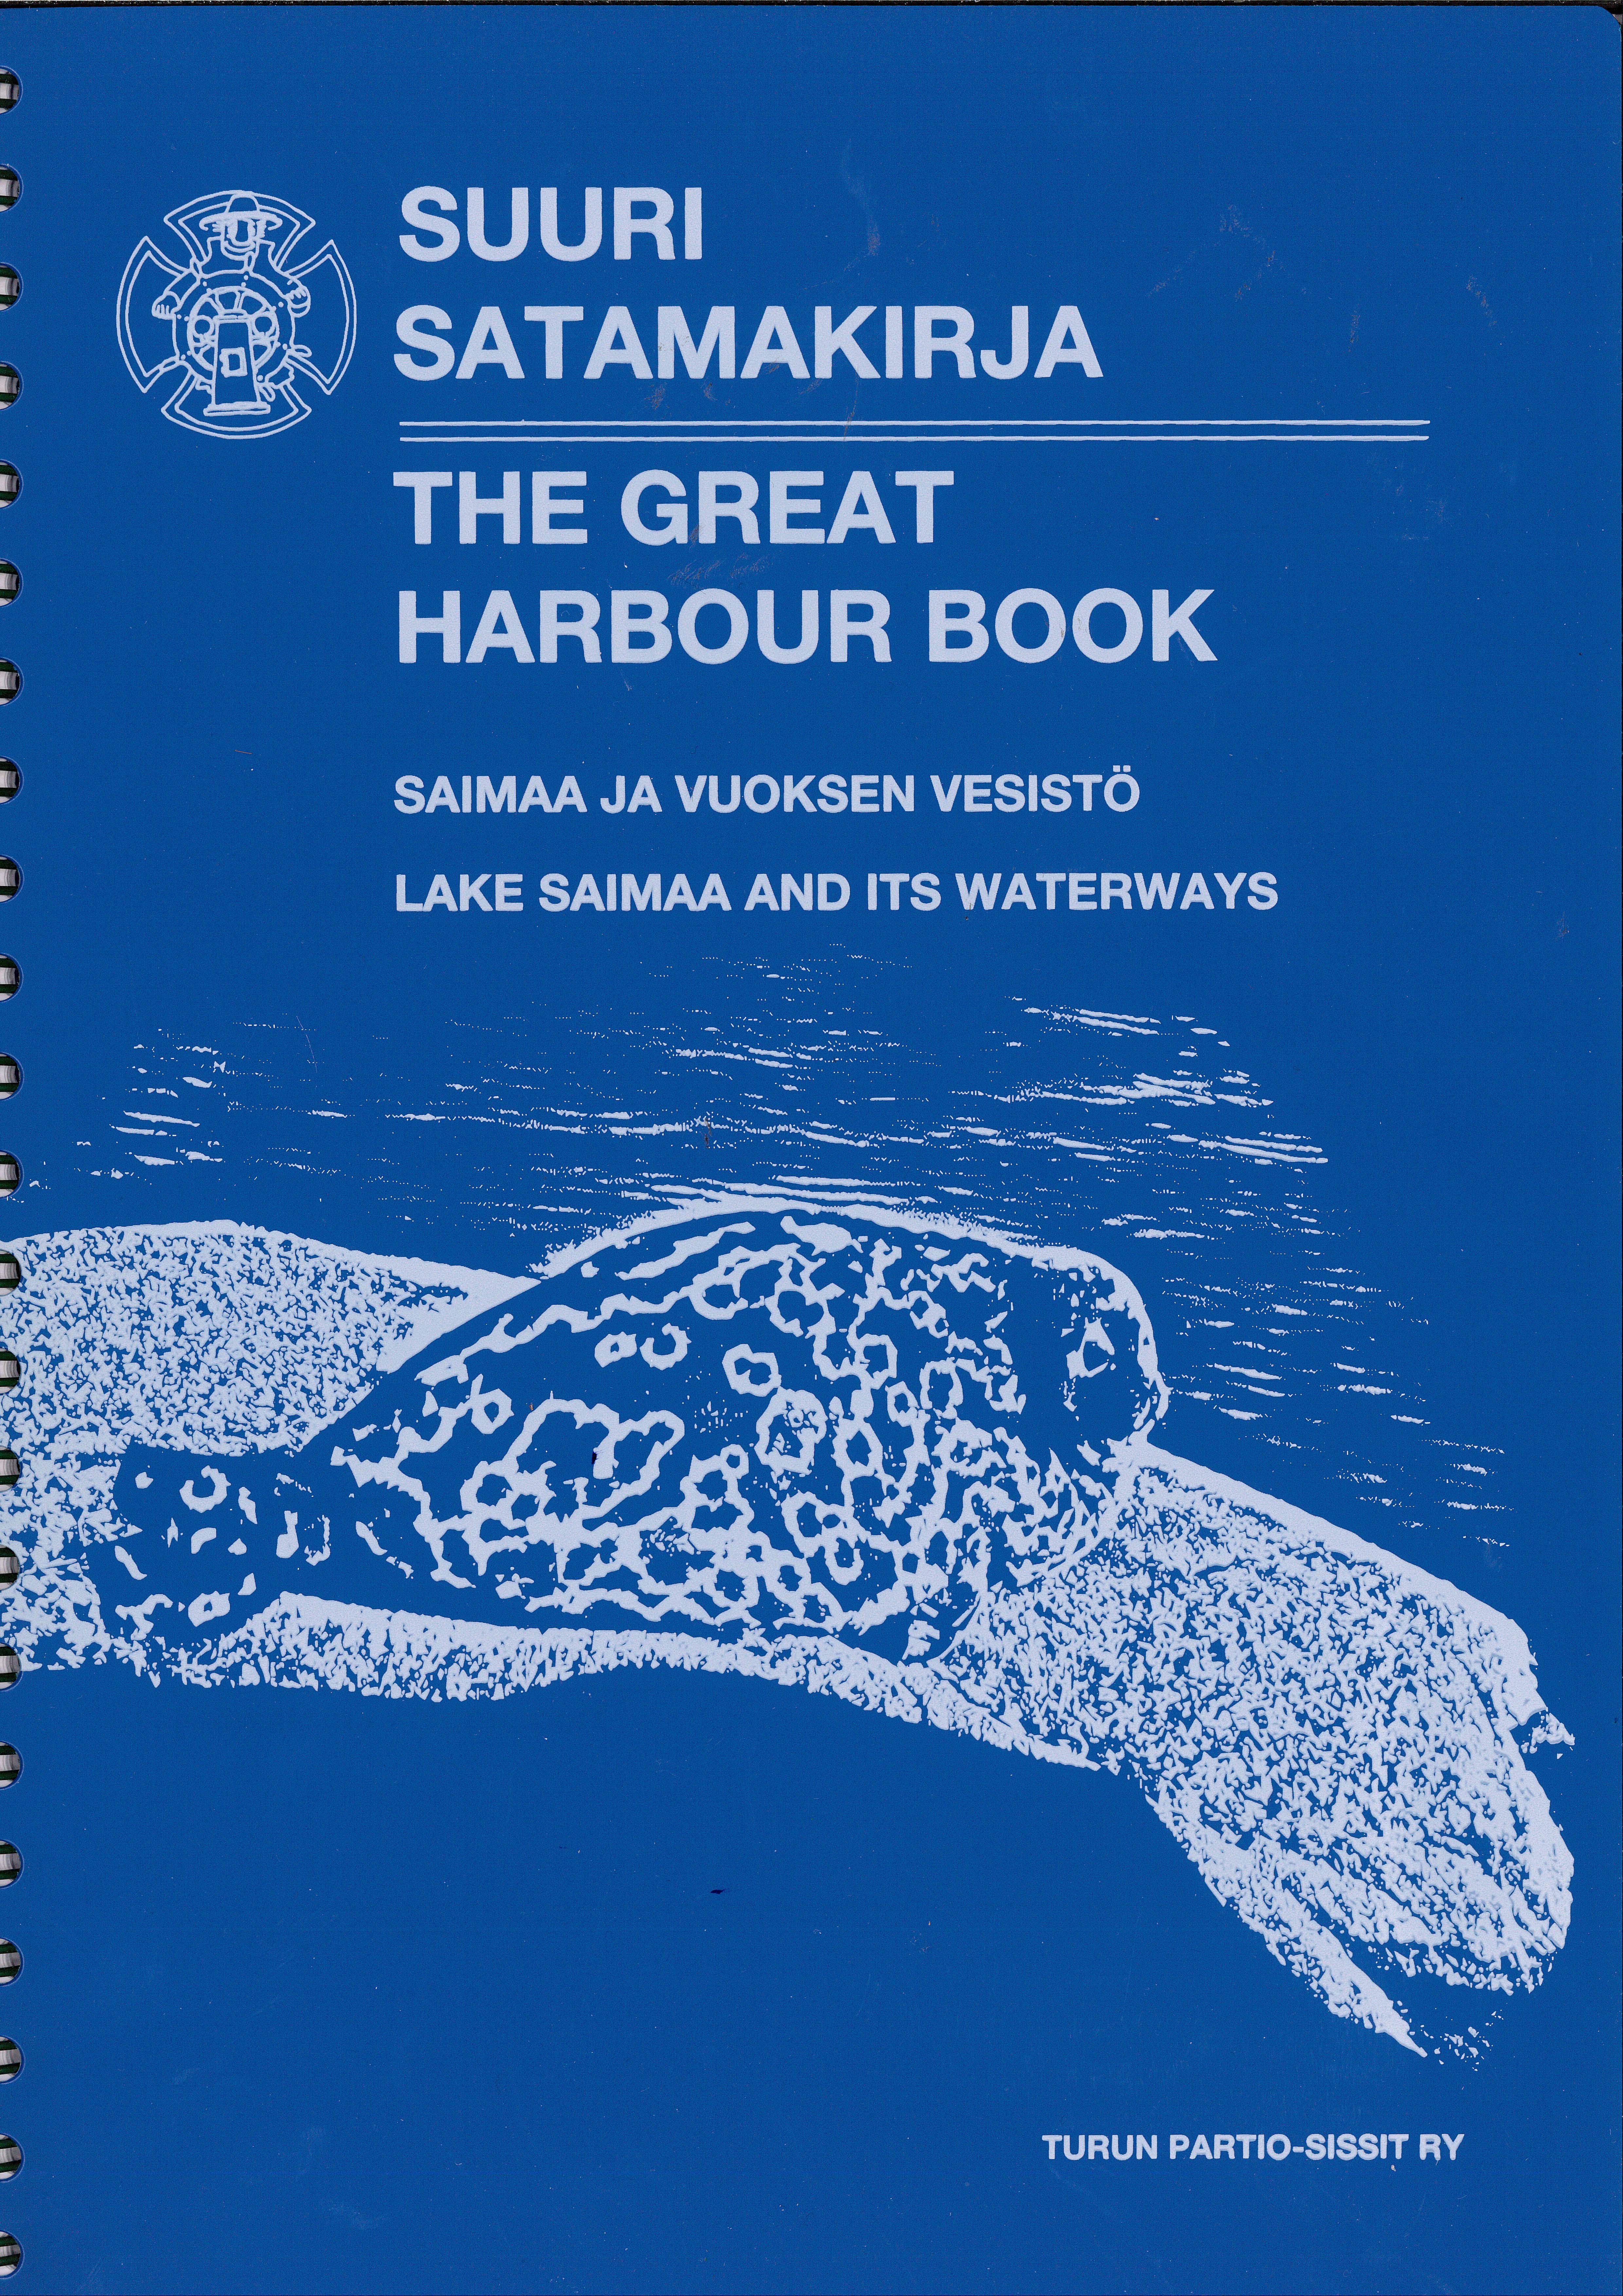 Turun Partio-Sissit ry Great Harbour Book – Lake Saimaa and waterways